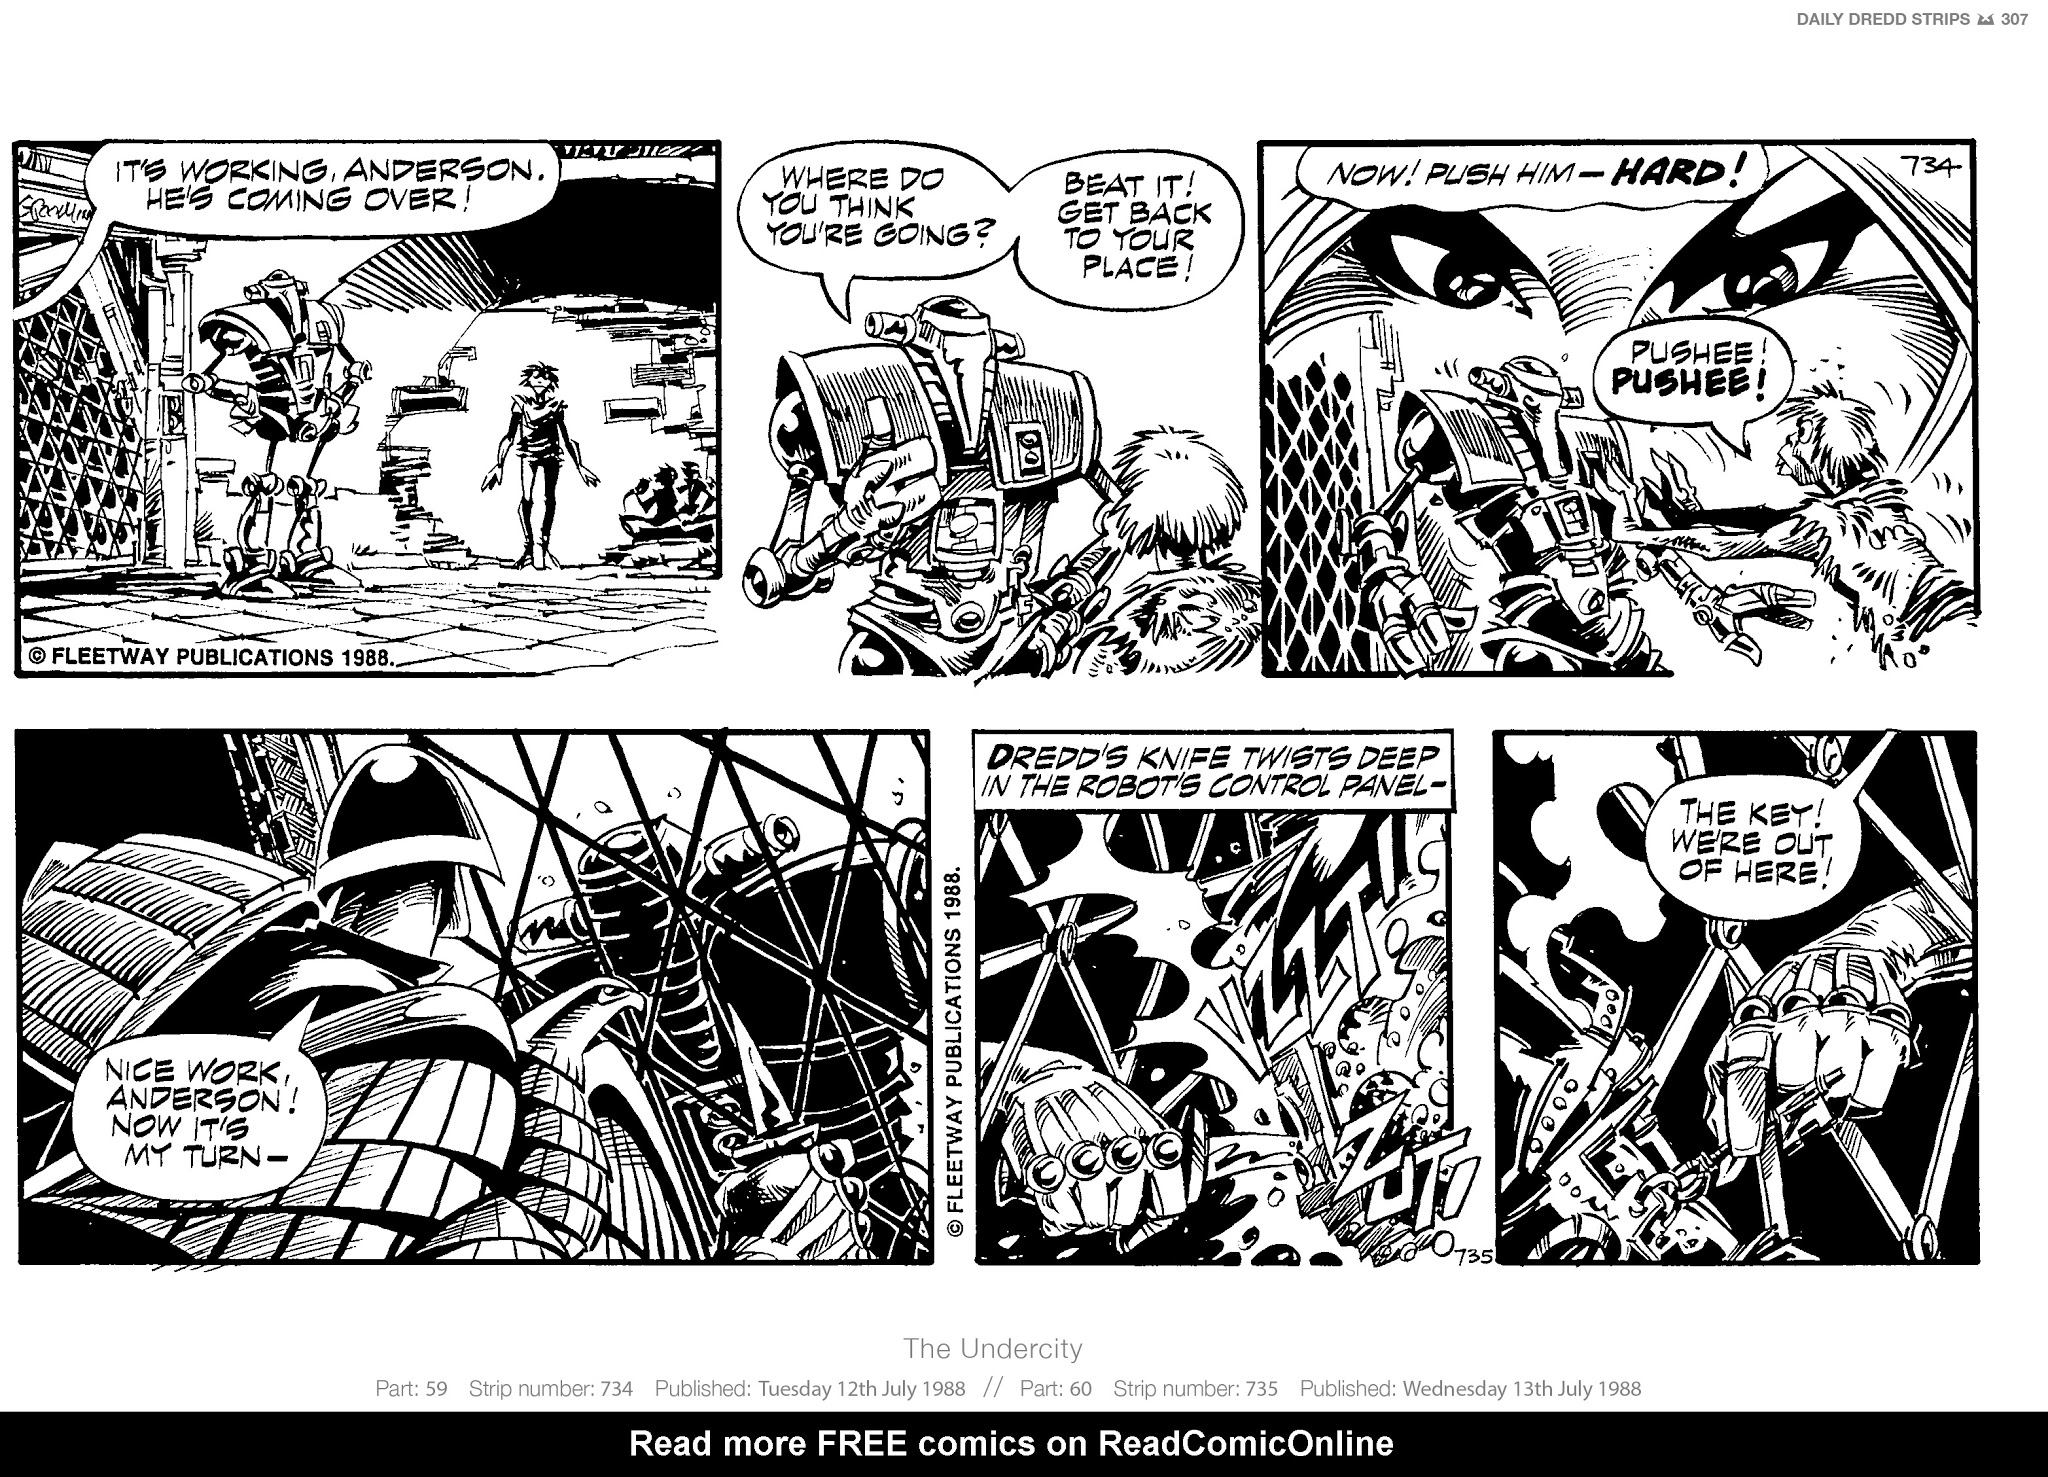 Read online Judge Dredd: The Daily Dredds comic -  Issue # TPB 2 - 310